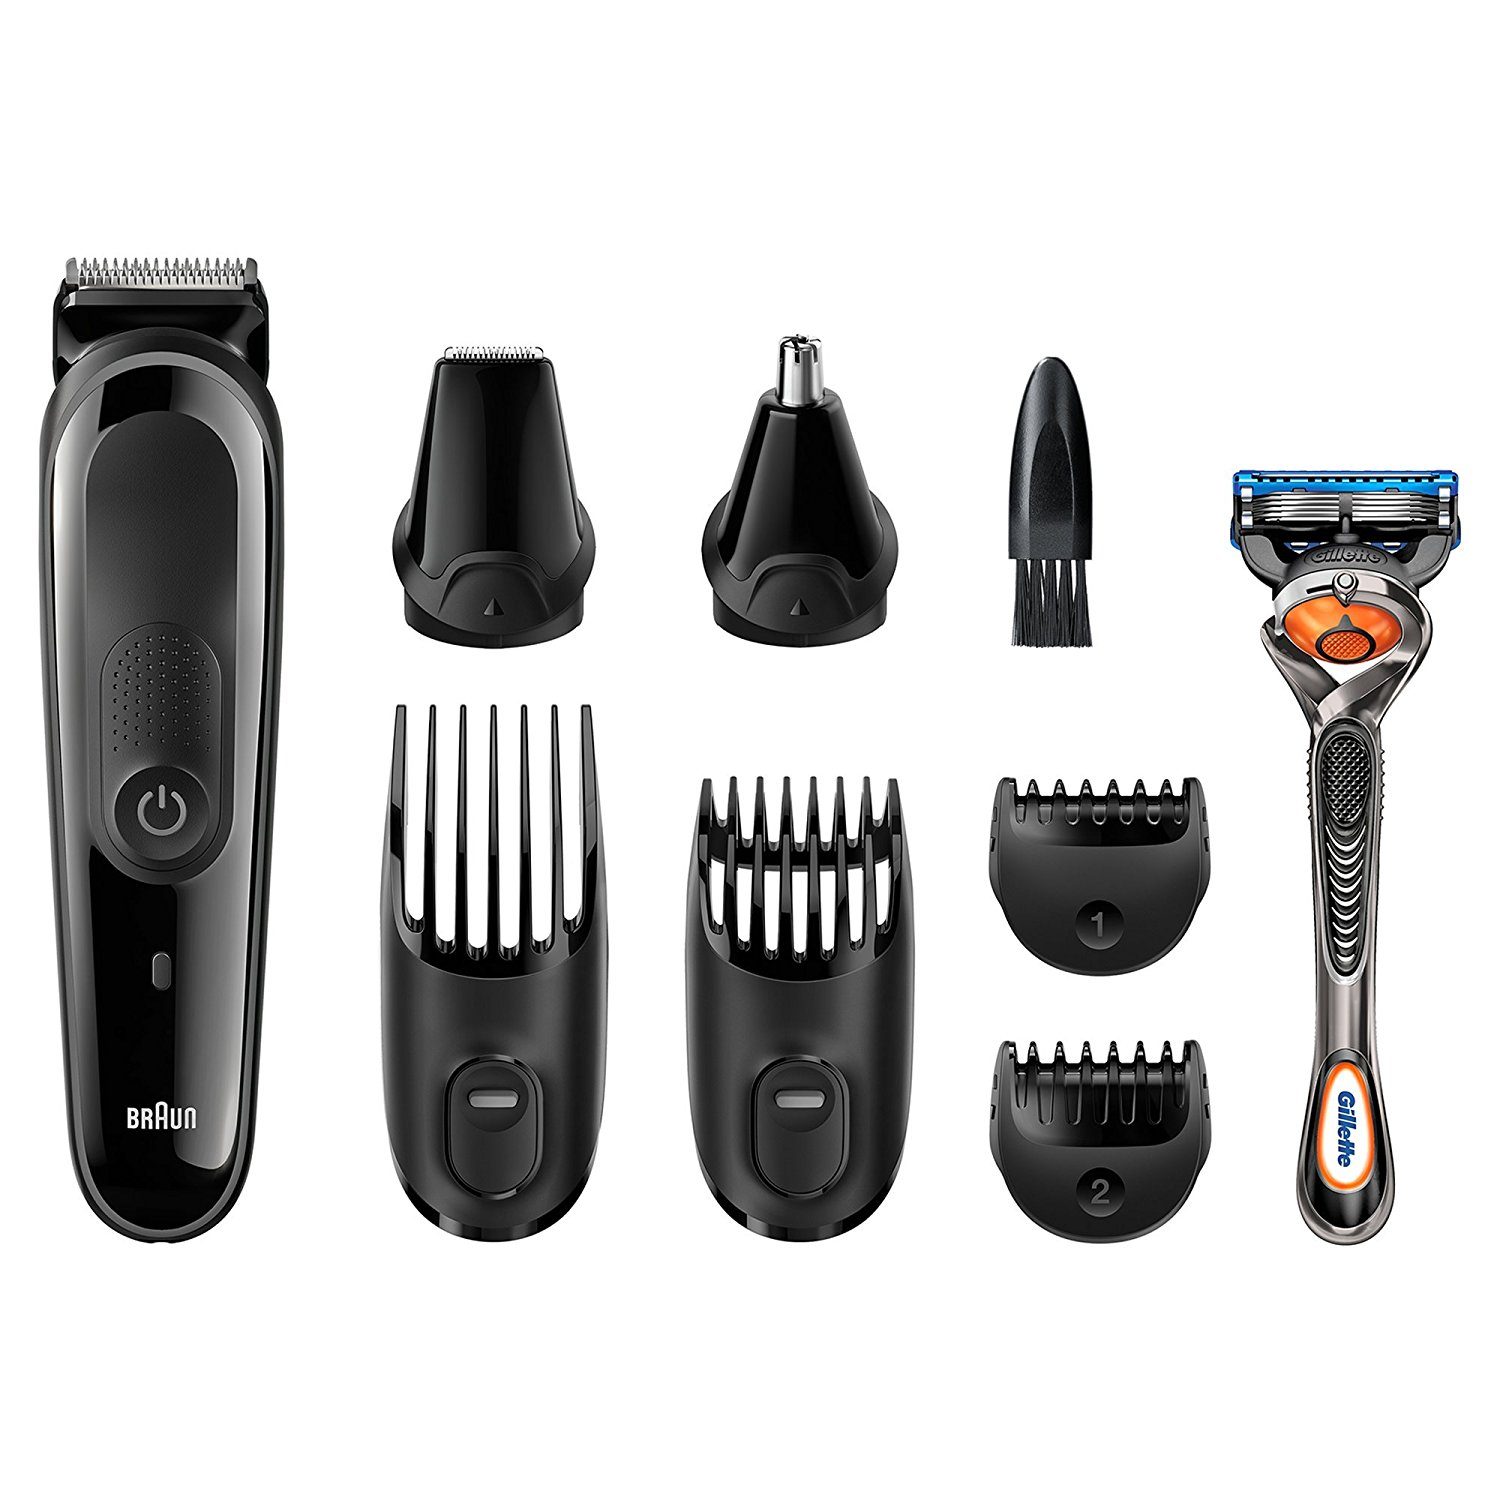 Braun MGK 3060 Multi grooming kit contents